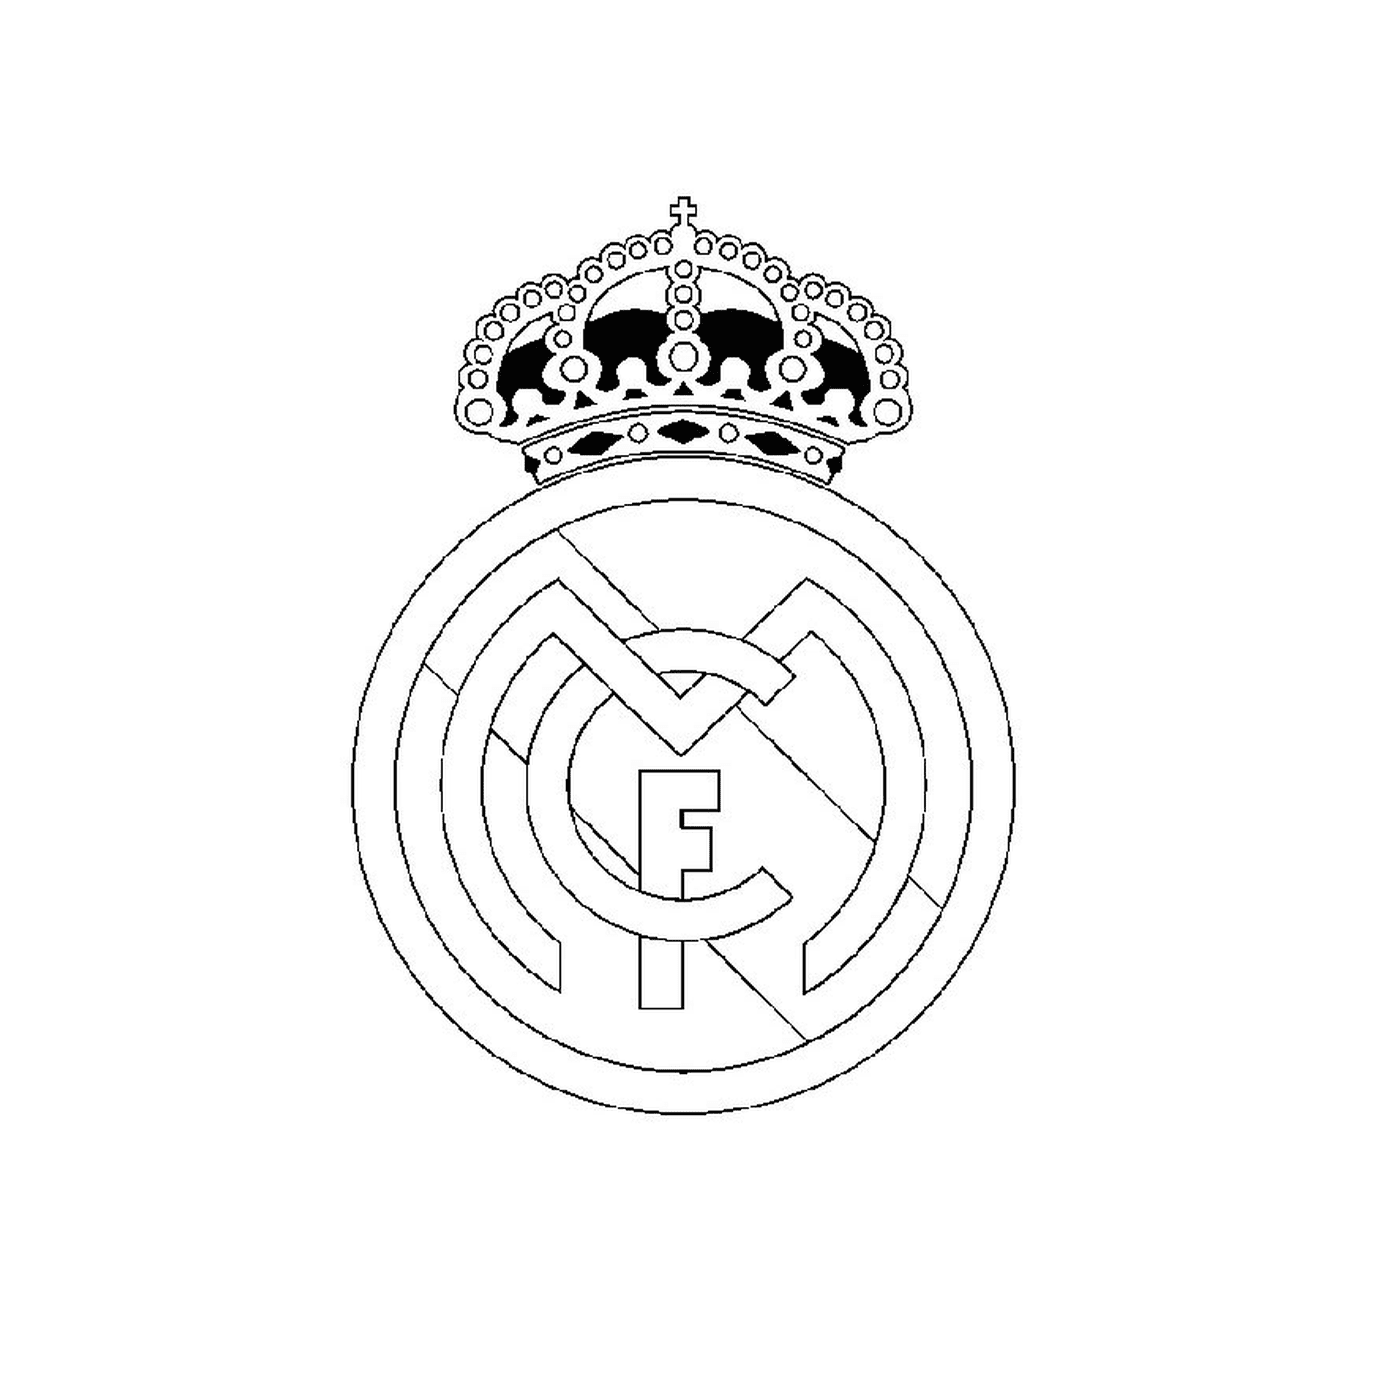  Logotipo do Real Madrid 